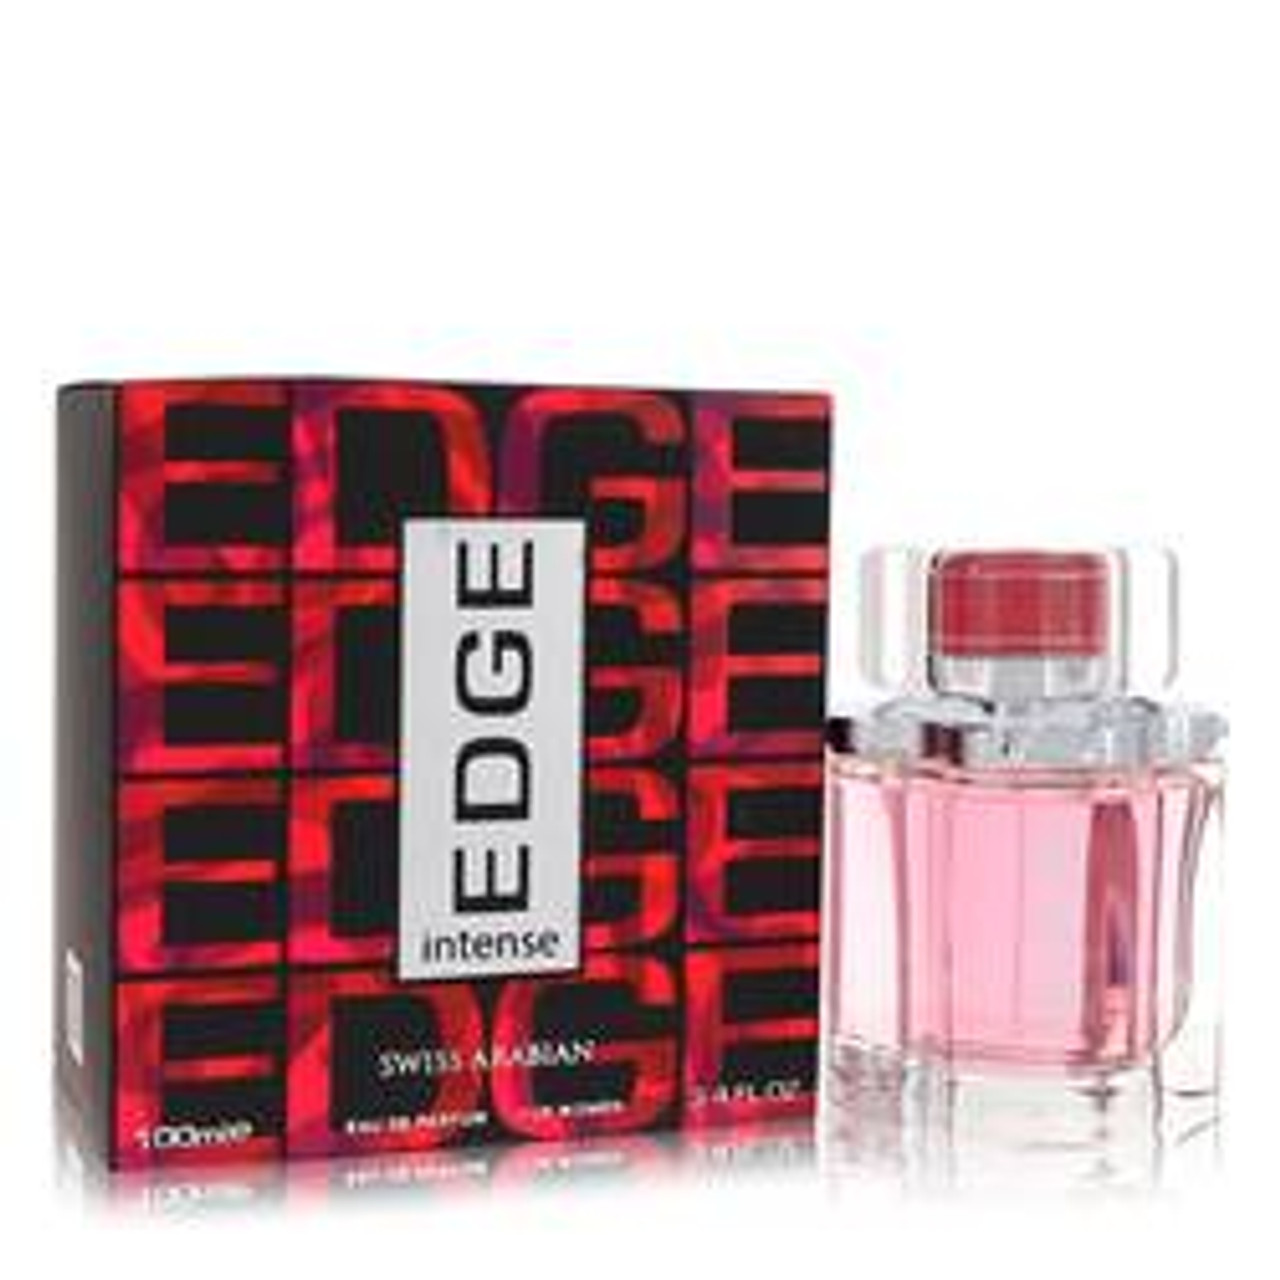 Edge Intense Perfume By Swiss Arabian Eau De Parfum Spray 3.4 oz for Women - [From 156.00 - Choose pk Qty ] - *Ships from Miami